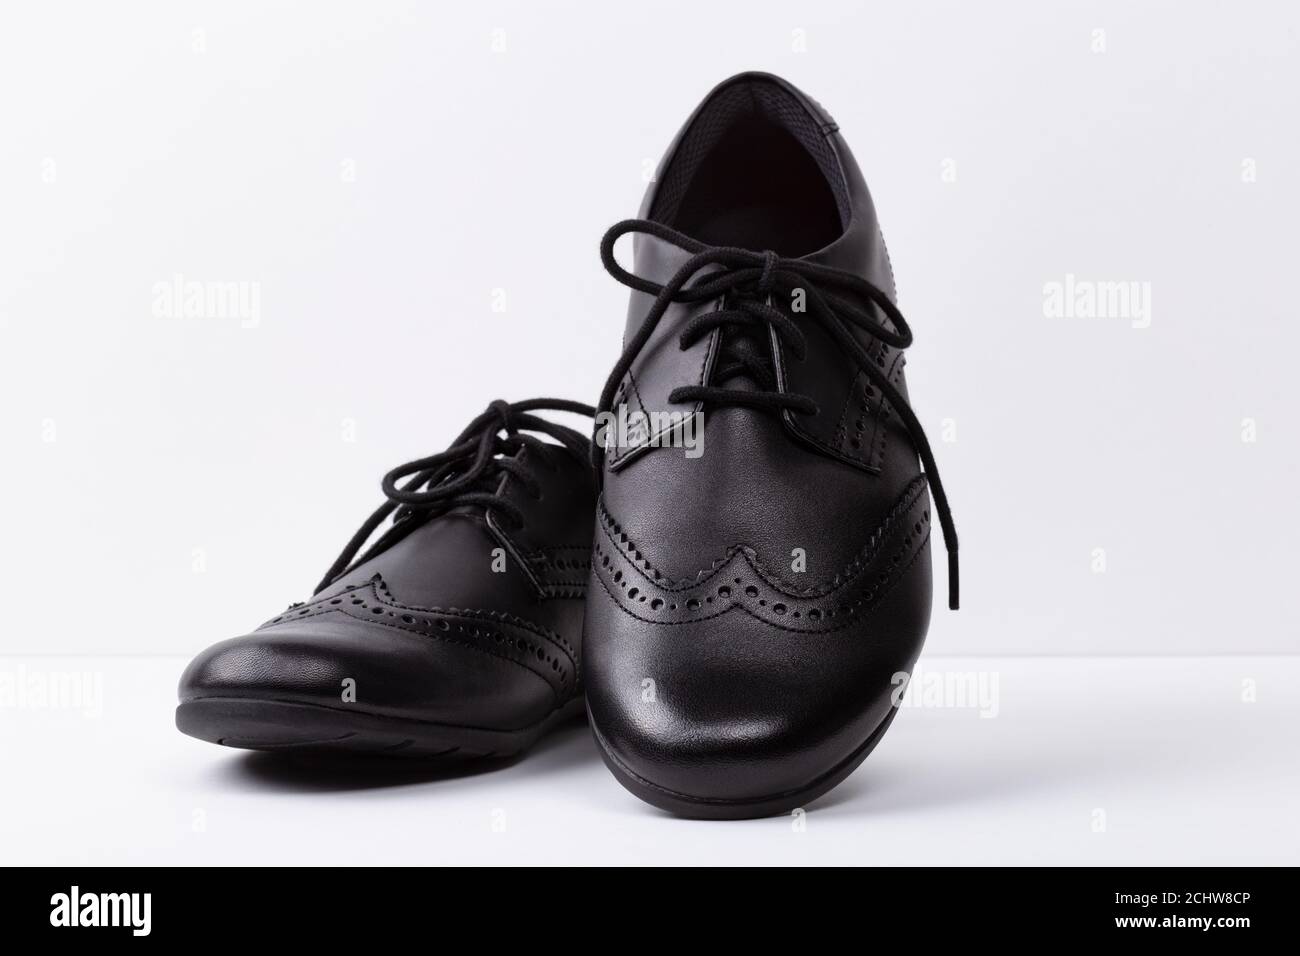 zapatos escolares negros Fotografía de stock - Alamy